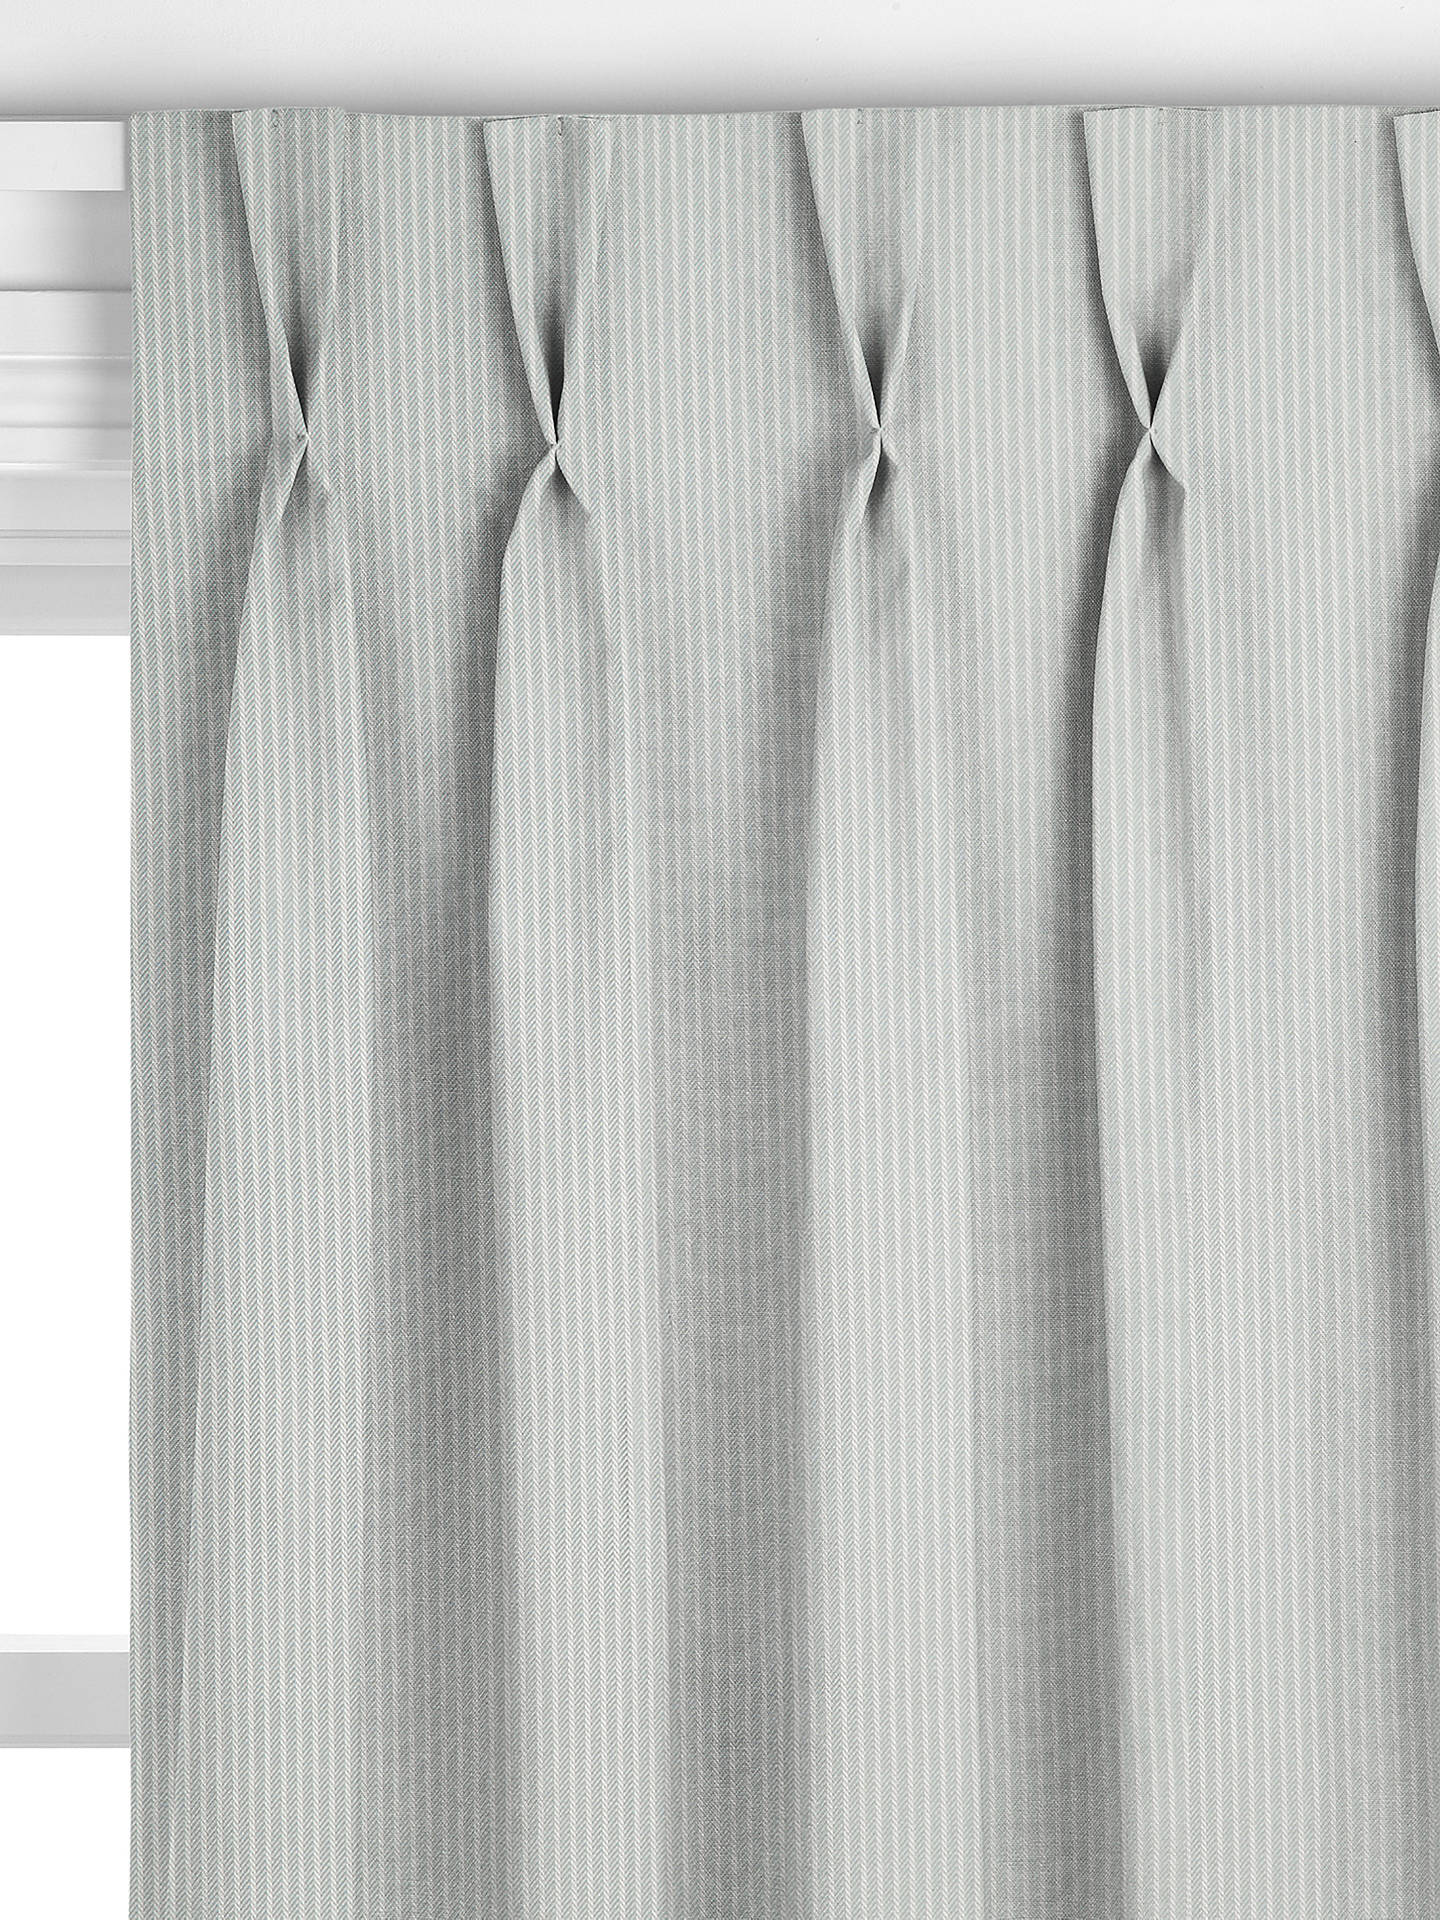 John Lewis Cotton Herringbone Stripe Made to Measure Curtains, Blue Grey